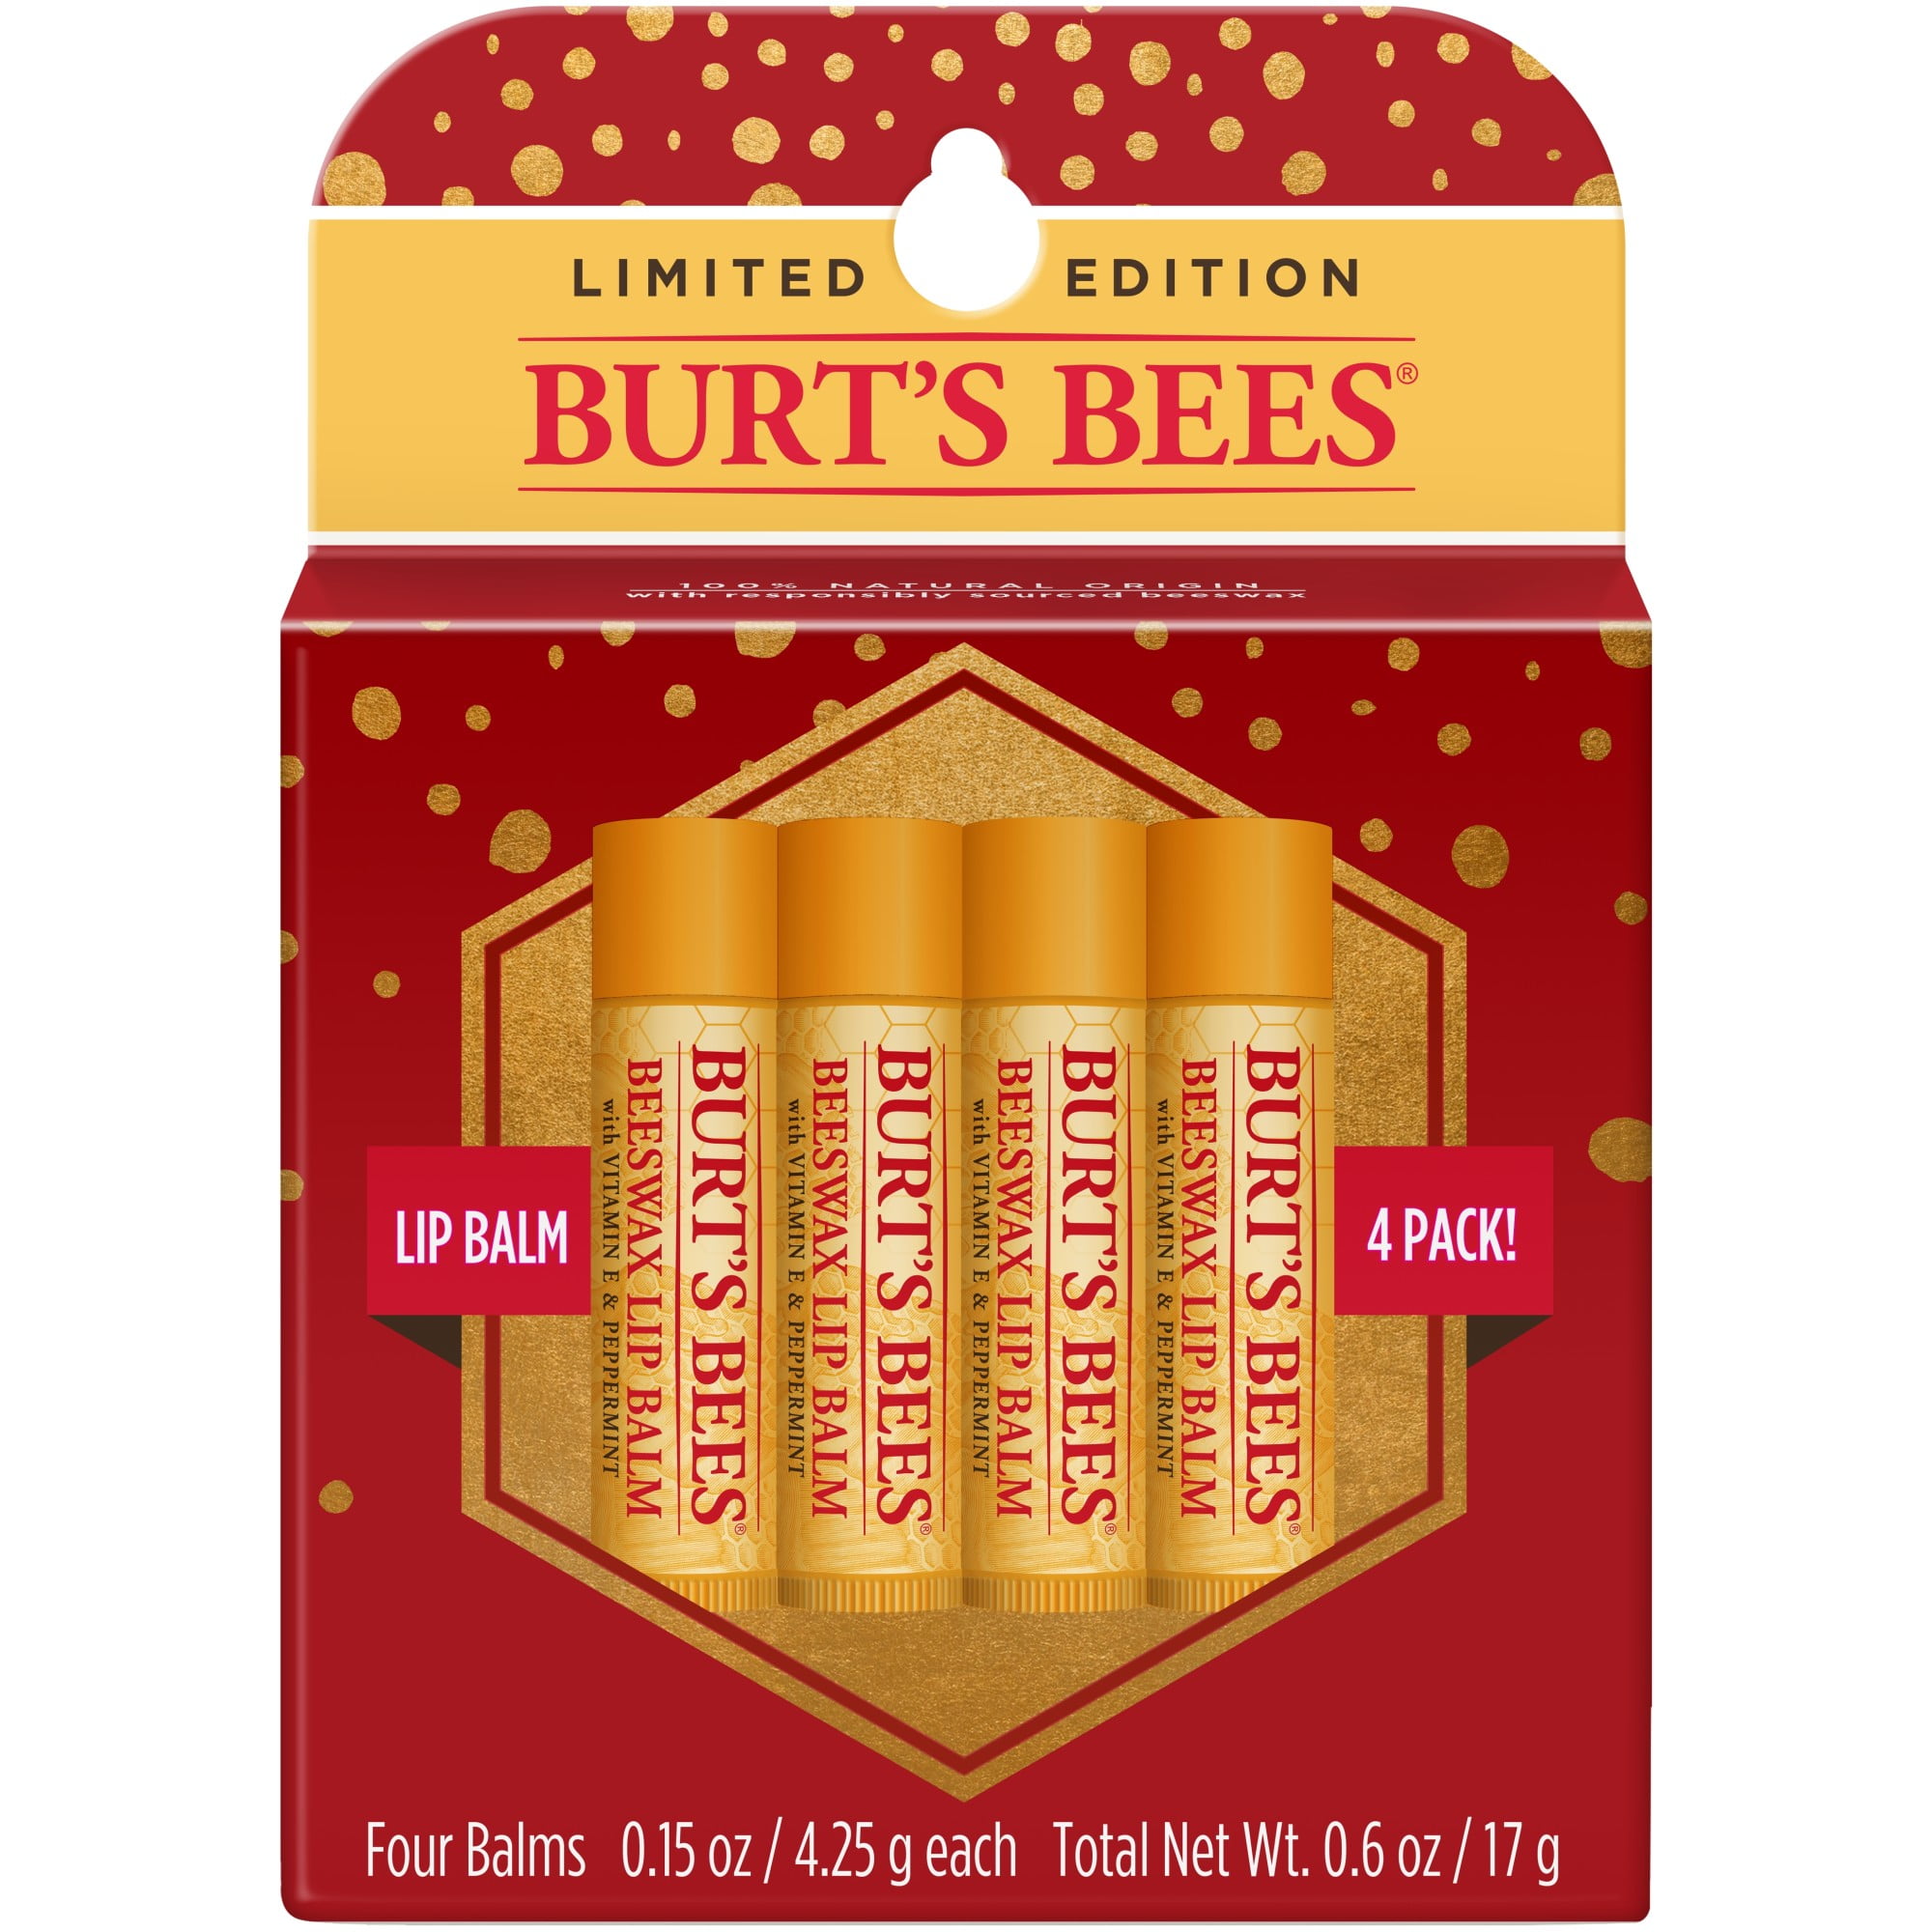 BURTS BEES BEESWAX LIP BALM 4.25G